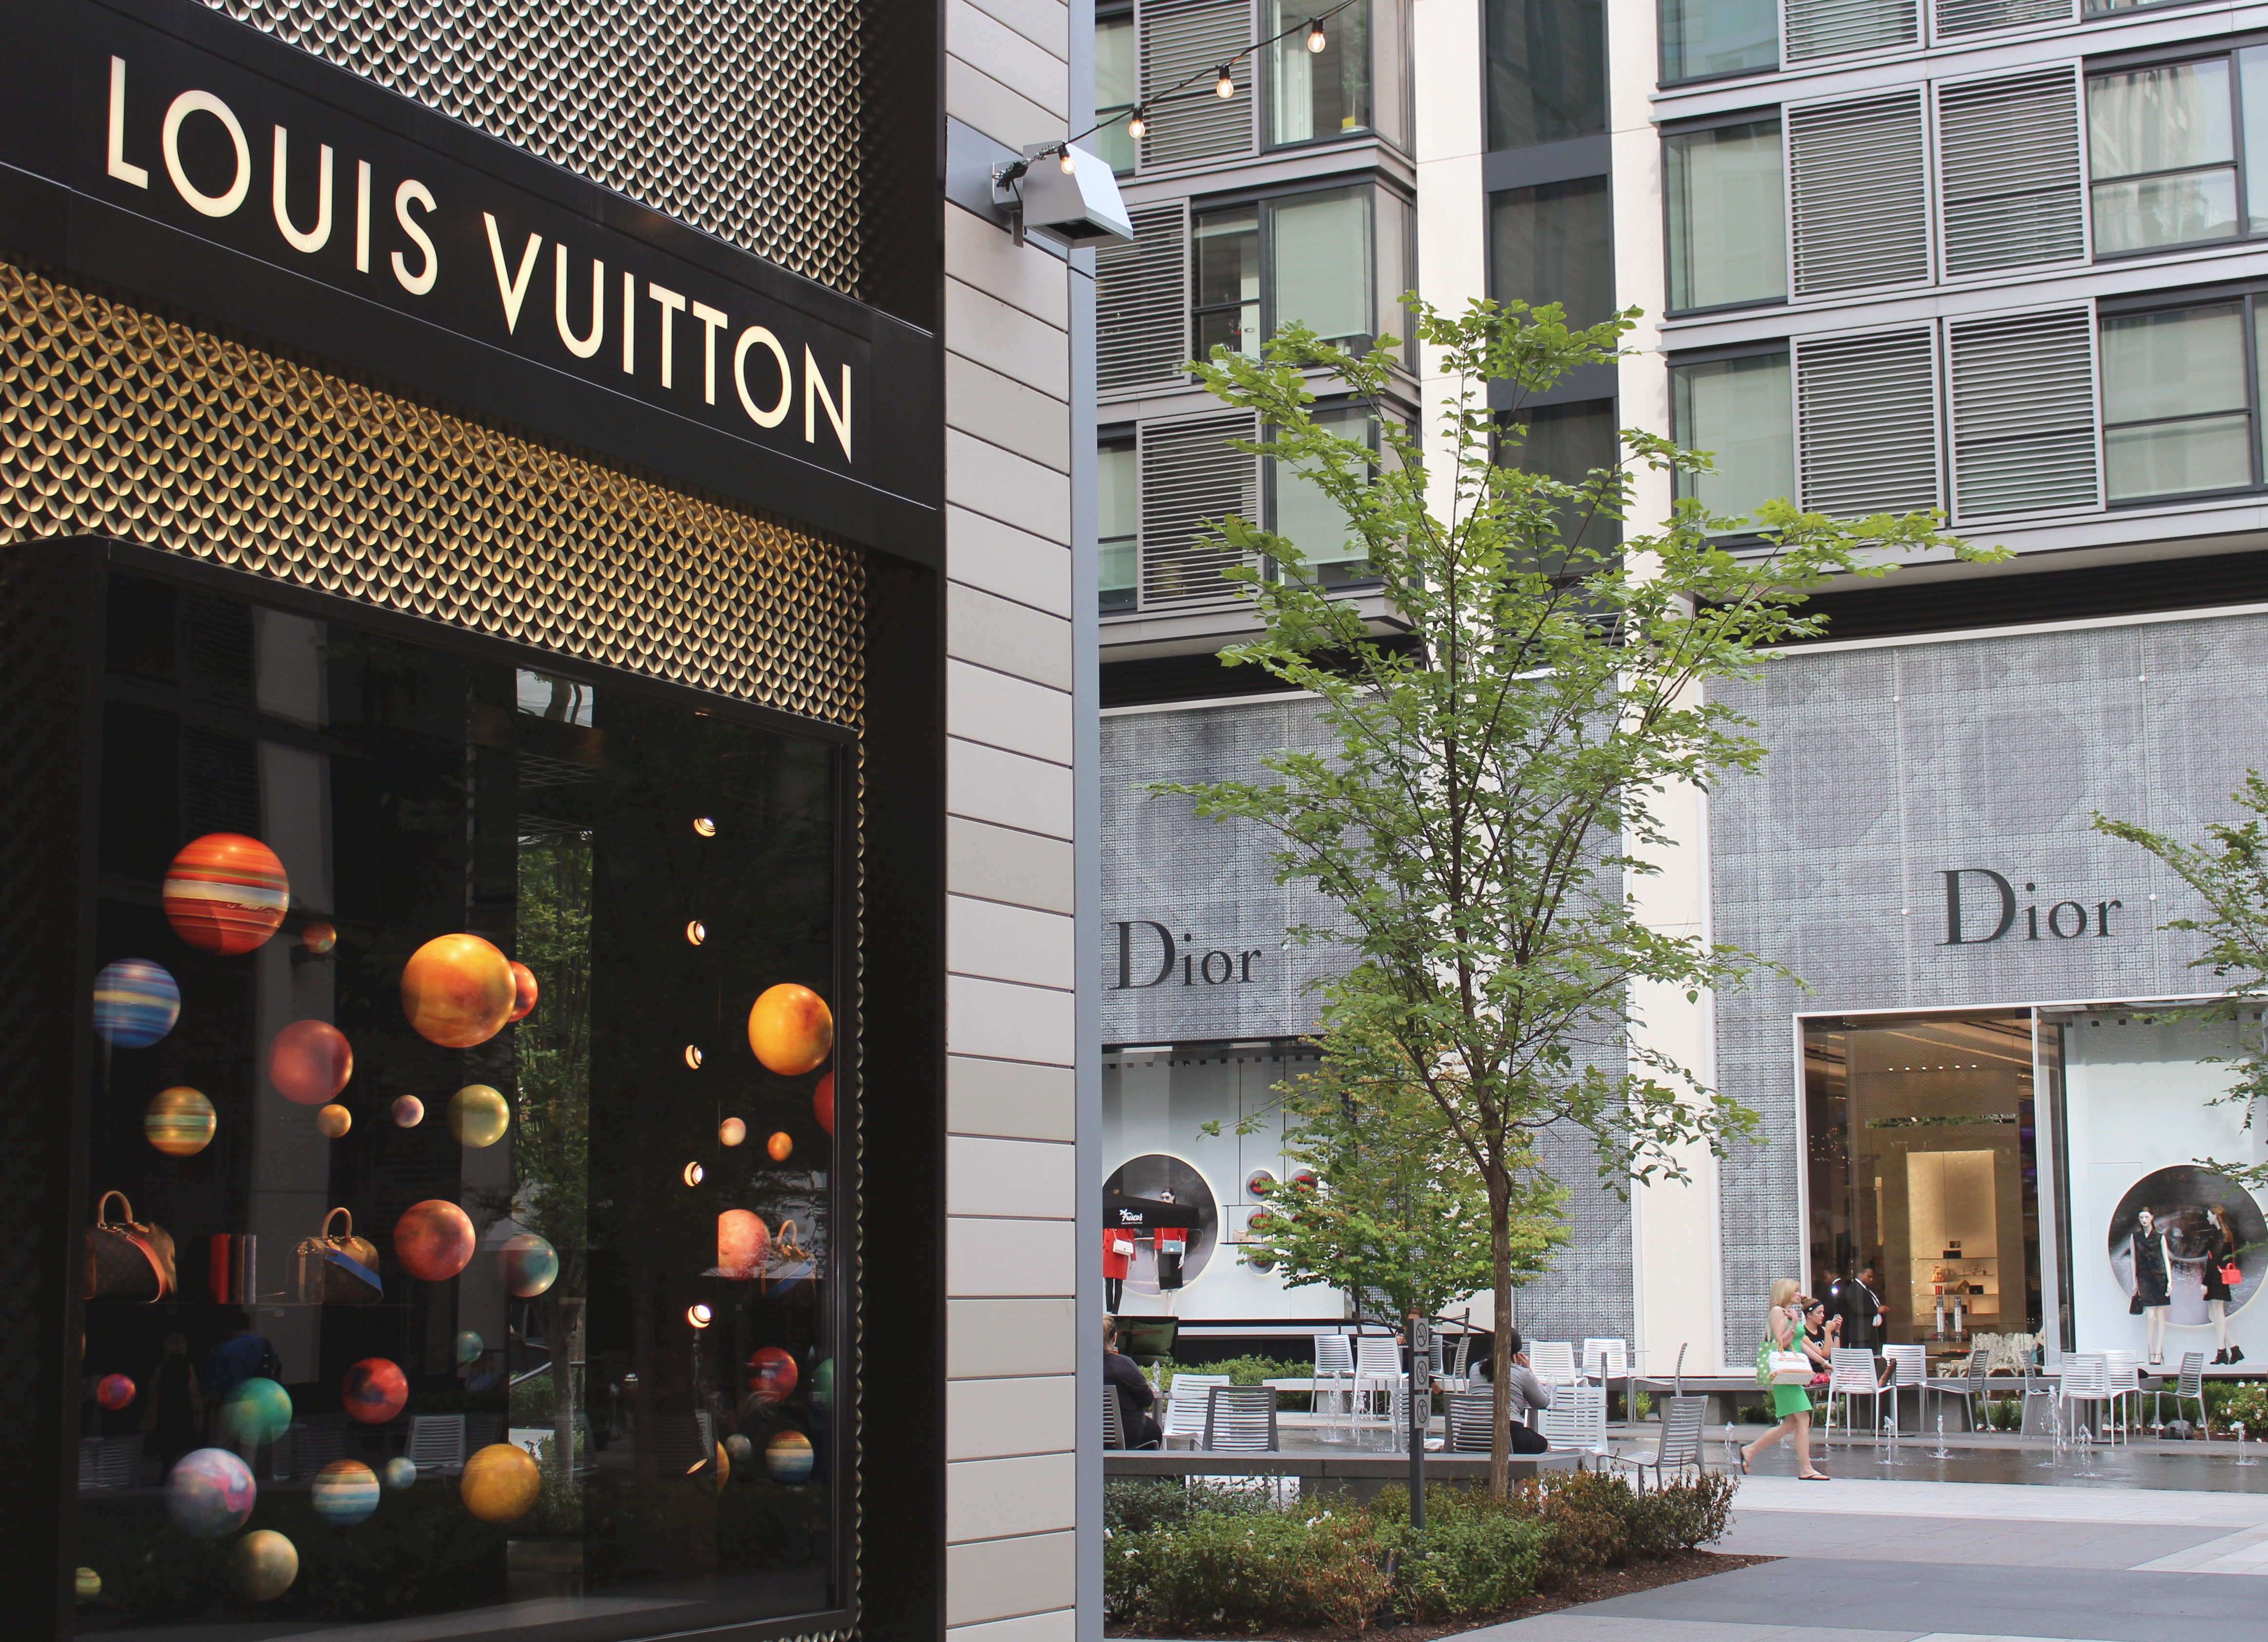 CITYCENTERDC: Louis Vuitton Opens at City Center DC